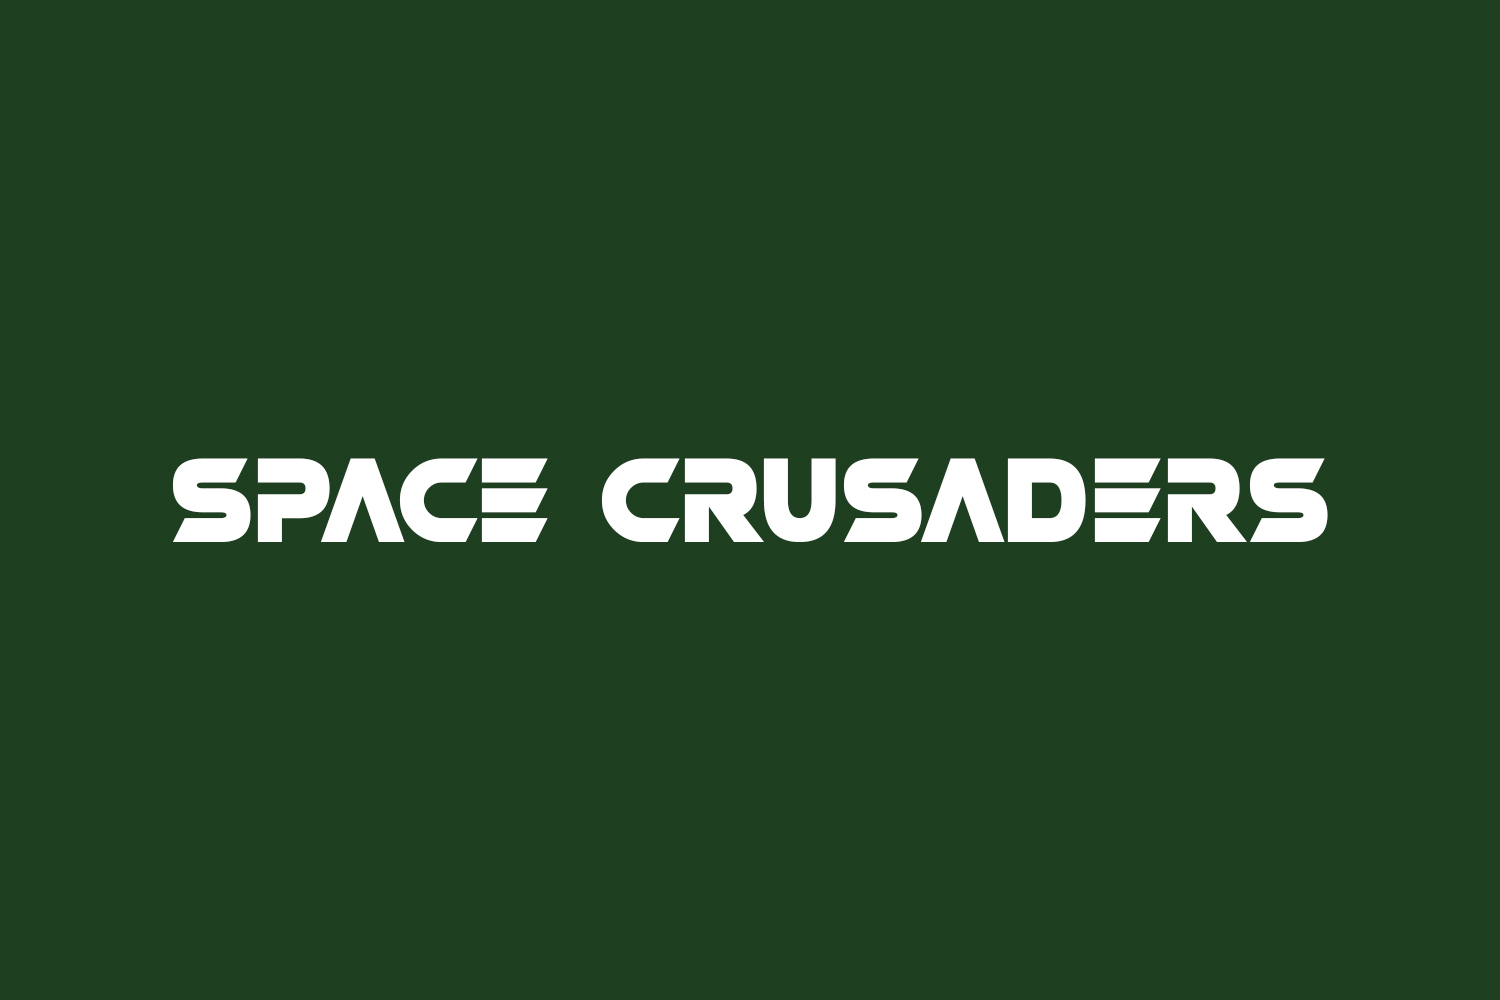 Space Crusaders Free Font